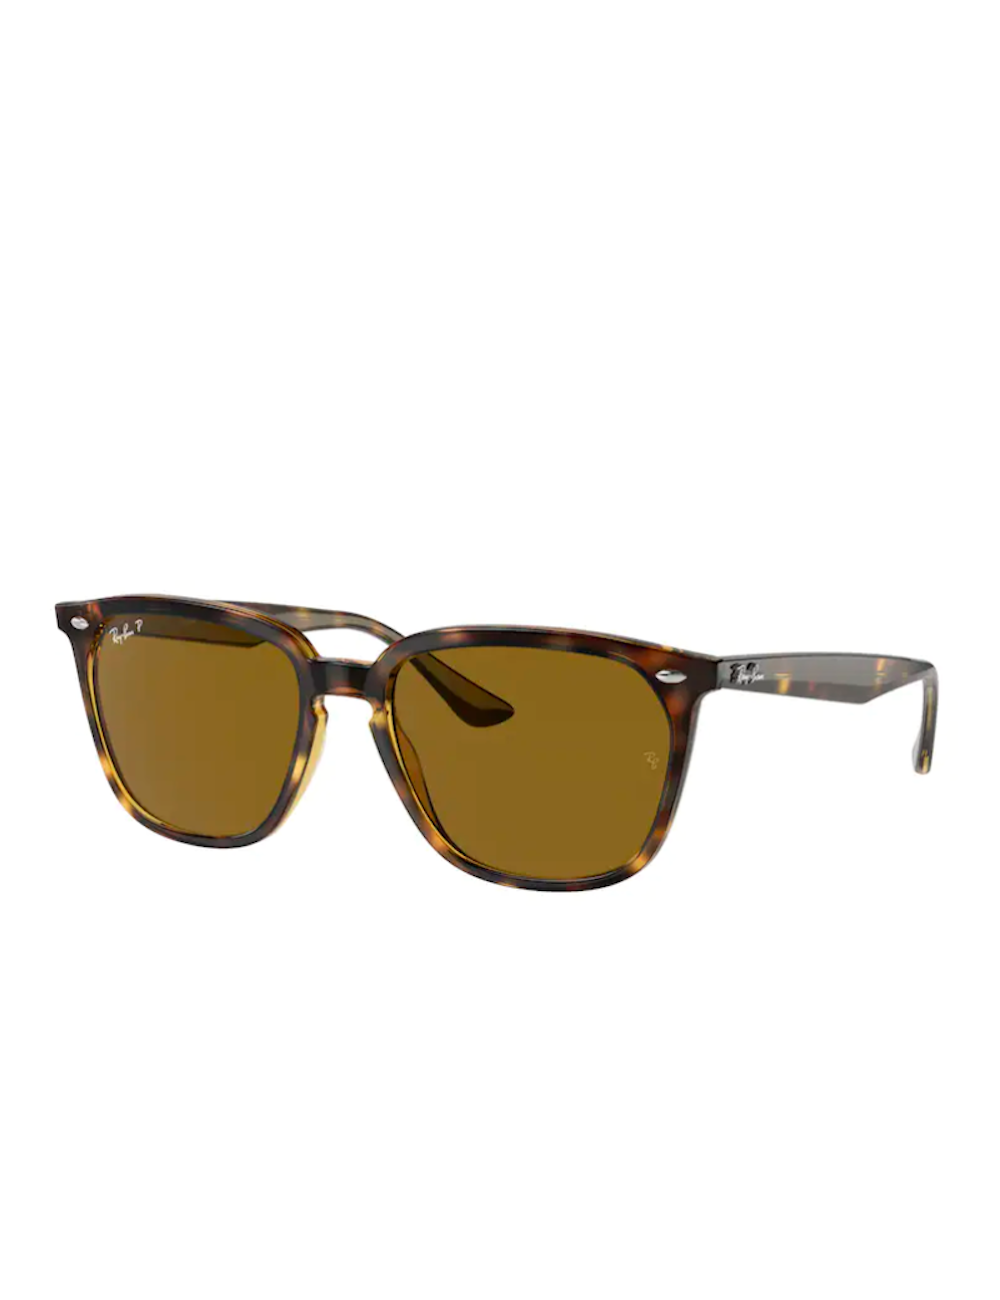 https://www.otticamauro.biz/30165-large_default/ray-ban-rb4362-unisex-polarized-sunglasses.jpg